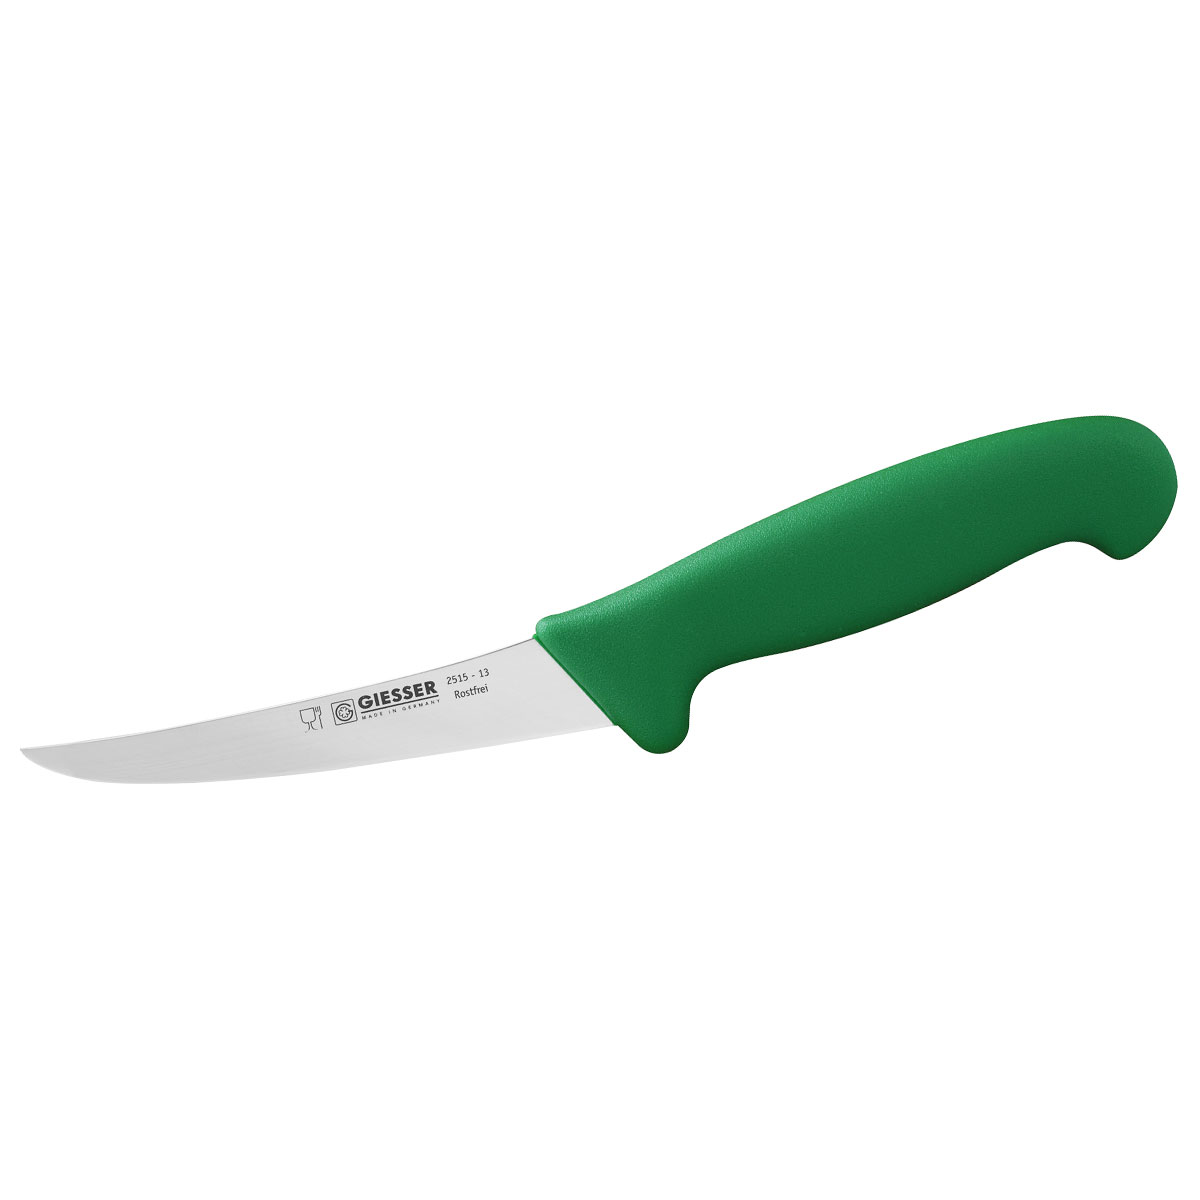 Giesser Boning Knife, 13cm (5) - Curved, Narrow, Stiff - Green